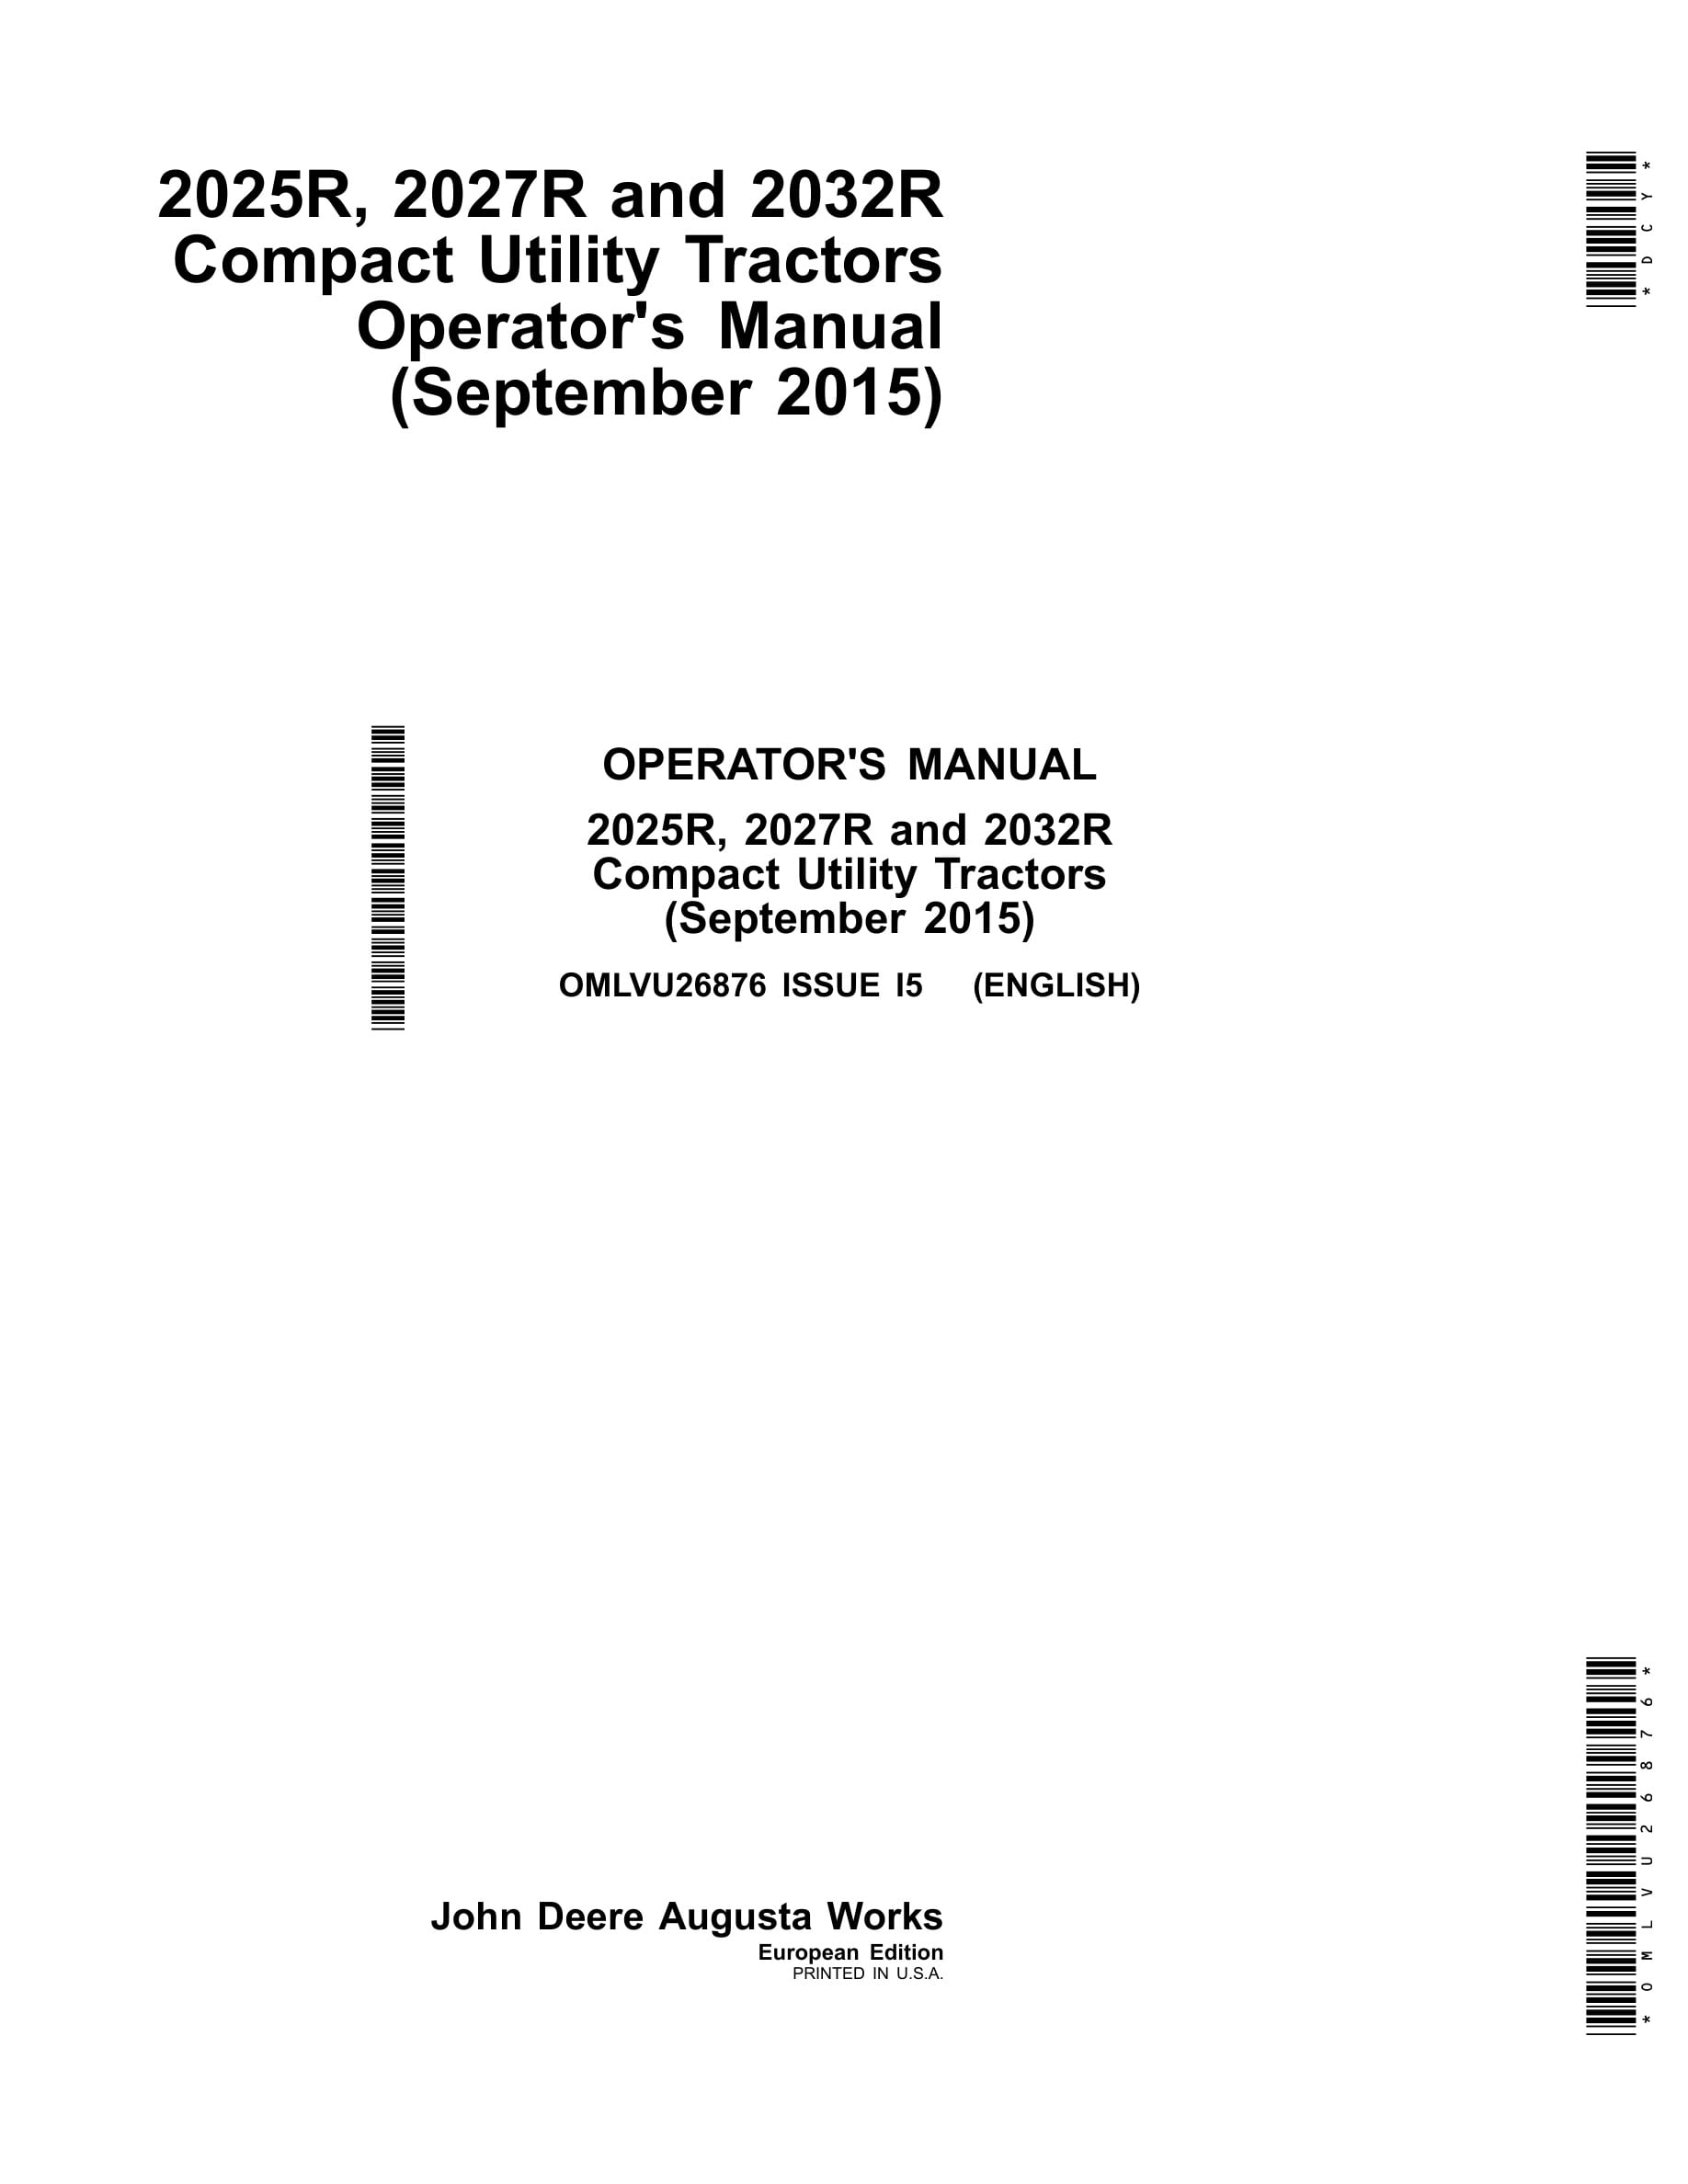 John Deere 2025r, 2027r And 2032r Compact Utility Tractors Operator Manuals OMLVU26876-1